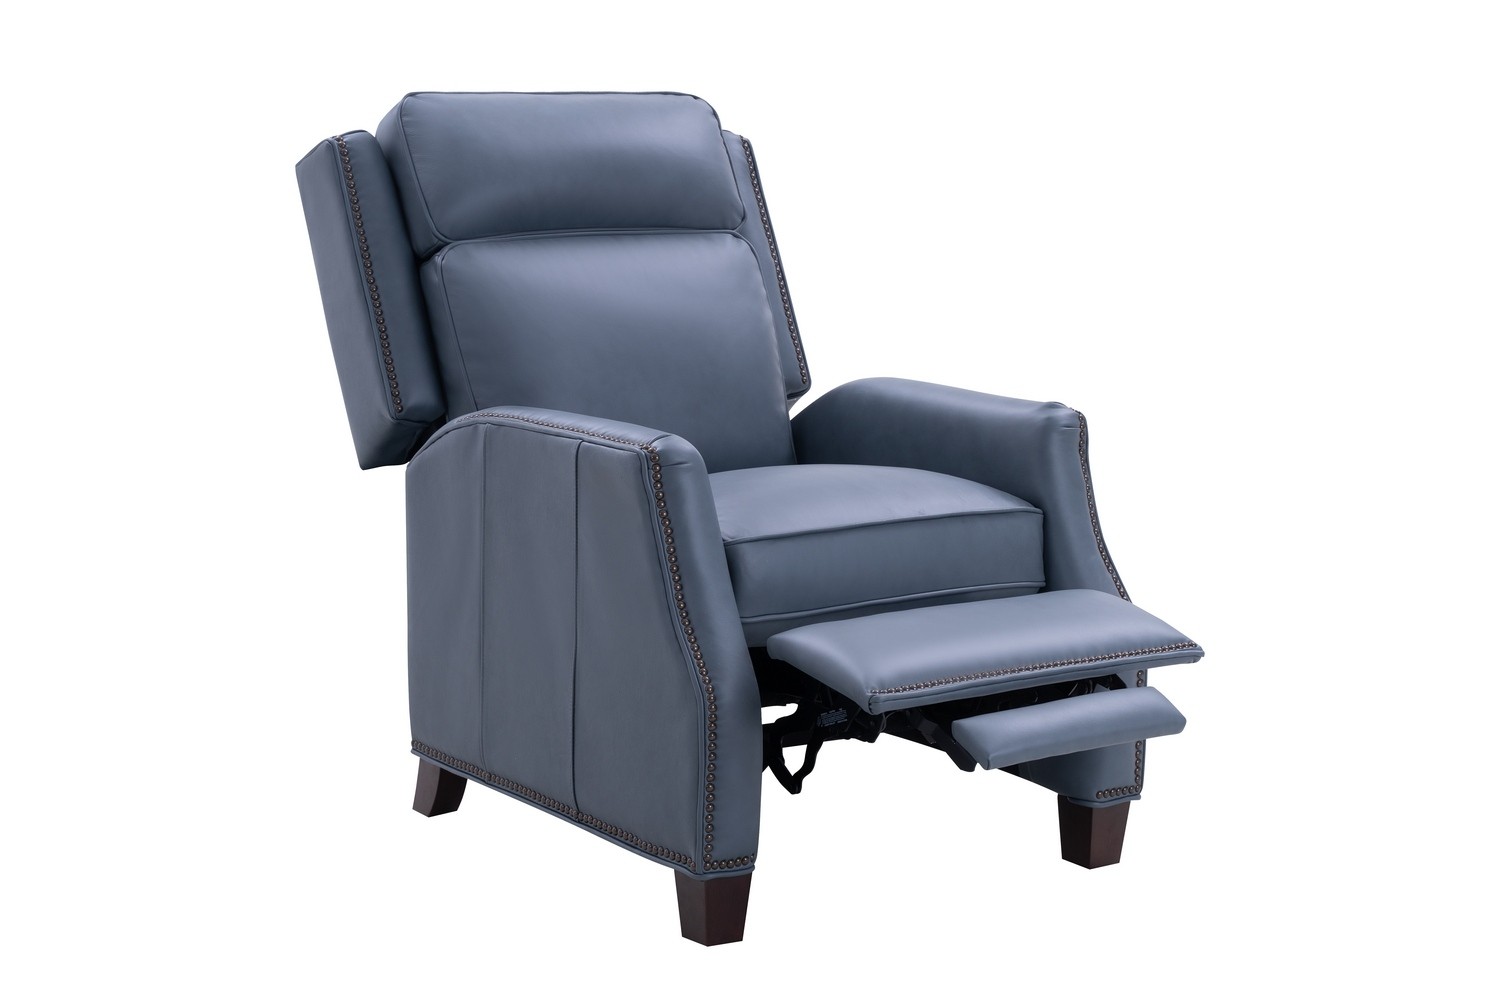 Barcalounger Van Buren Recliner Chair - Corbett Steel Gray/All Leather